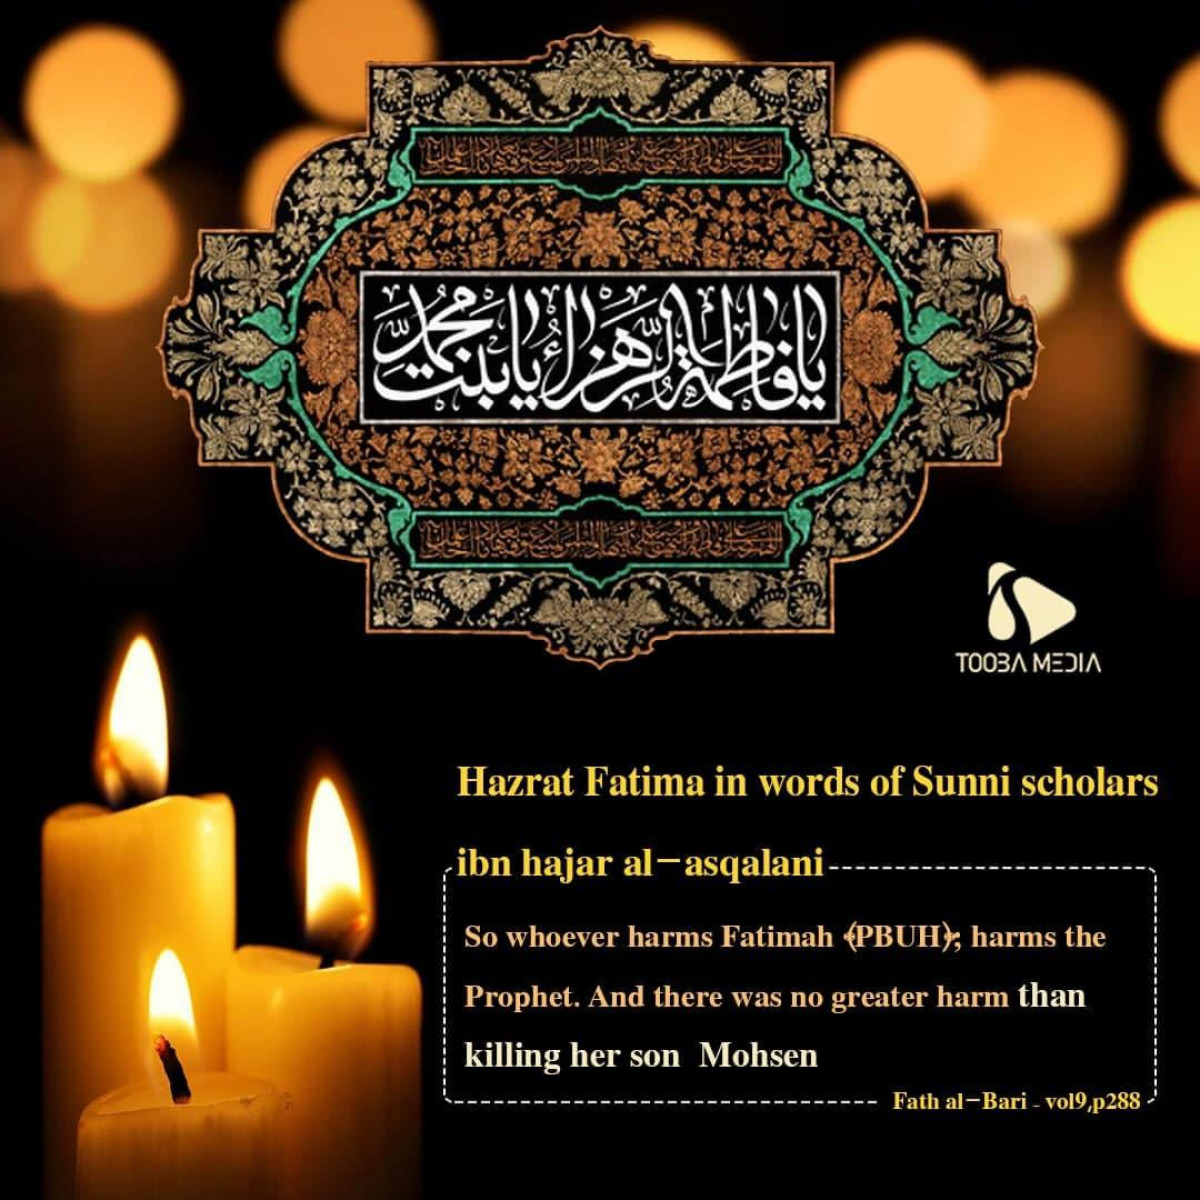 Hazrat Fatima (pbuh) in words of Sunni scholars 4